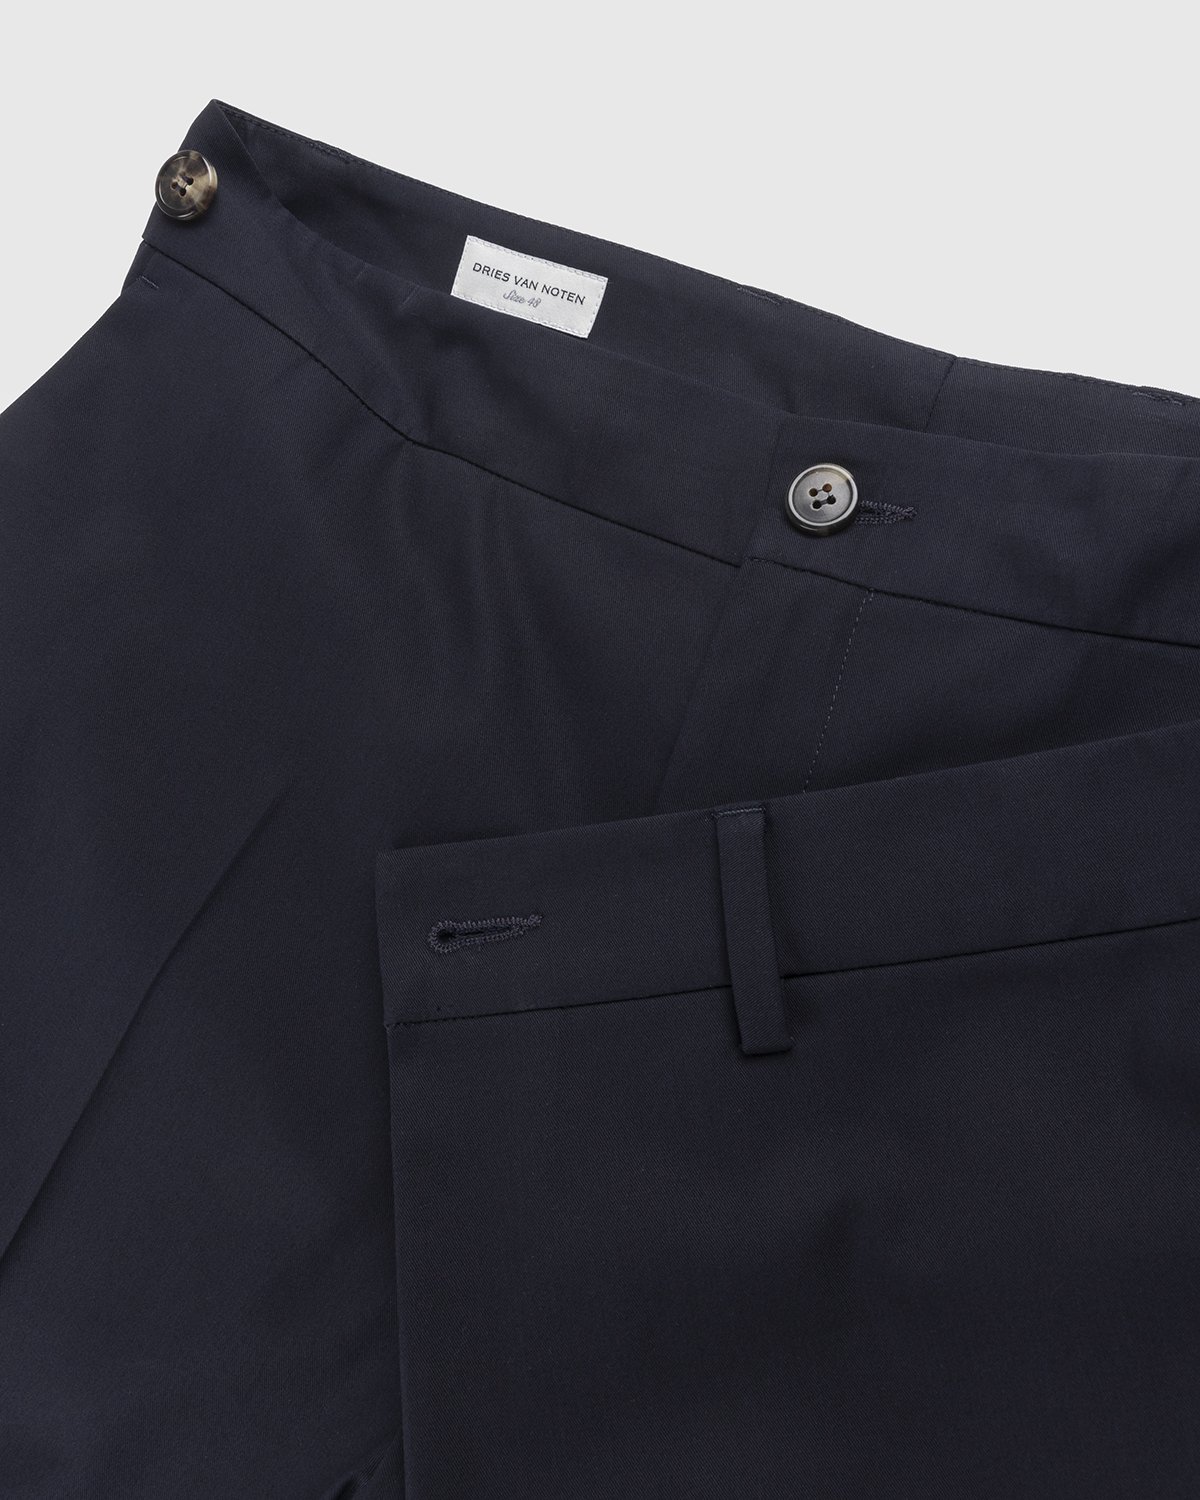 Dries van Noten - Parwin Shorts Navy - Clothing - Blue - Image 4